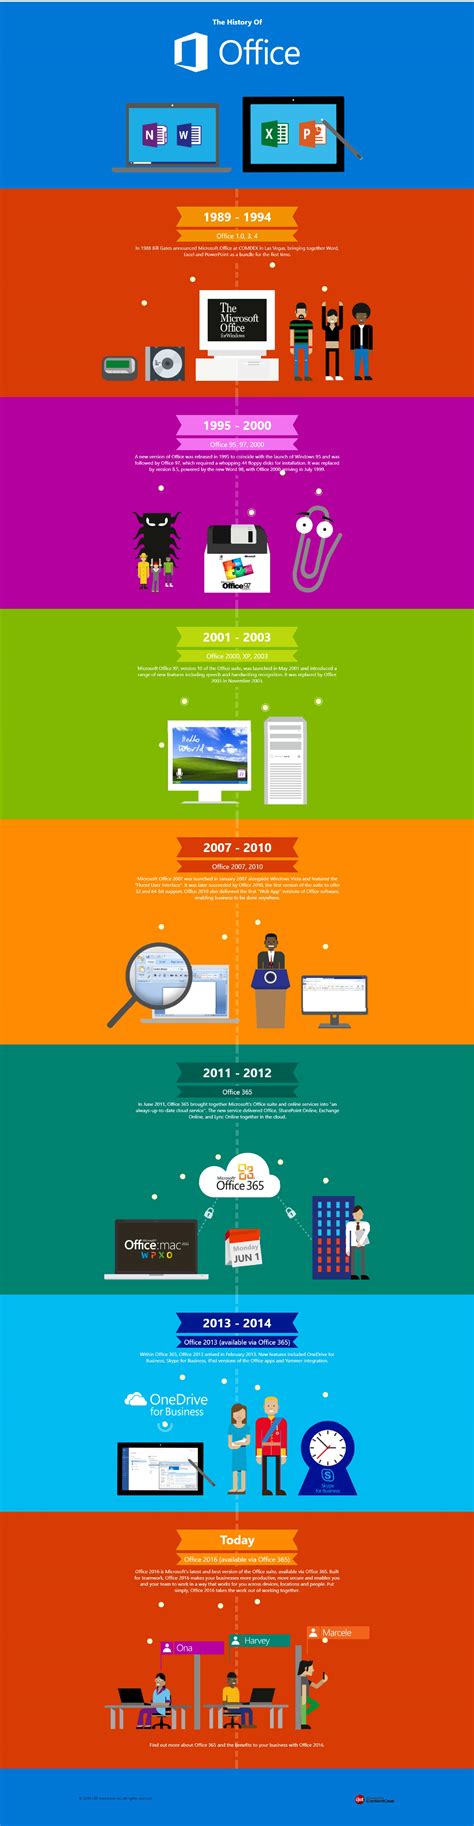 Historia De Microsoft Office Infografia Infographic Software Hot Sex